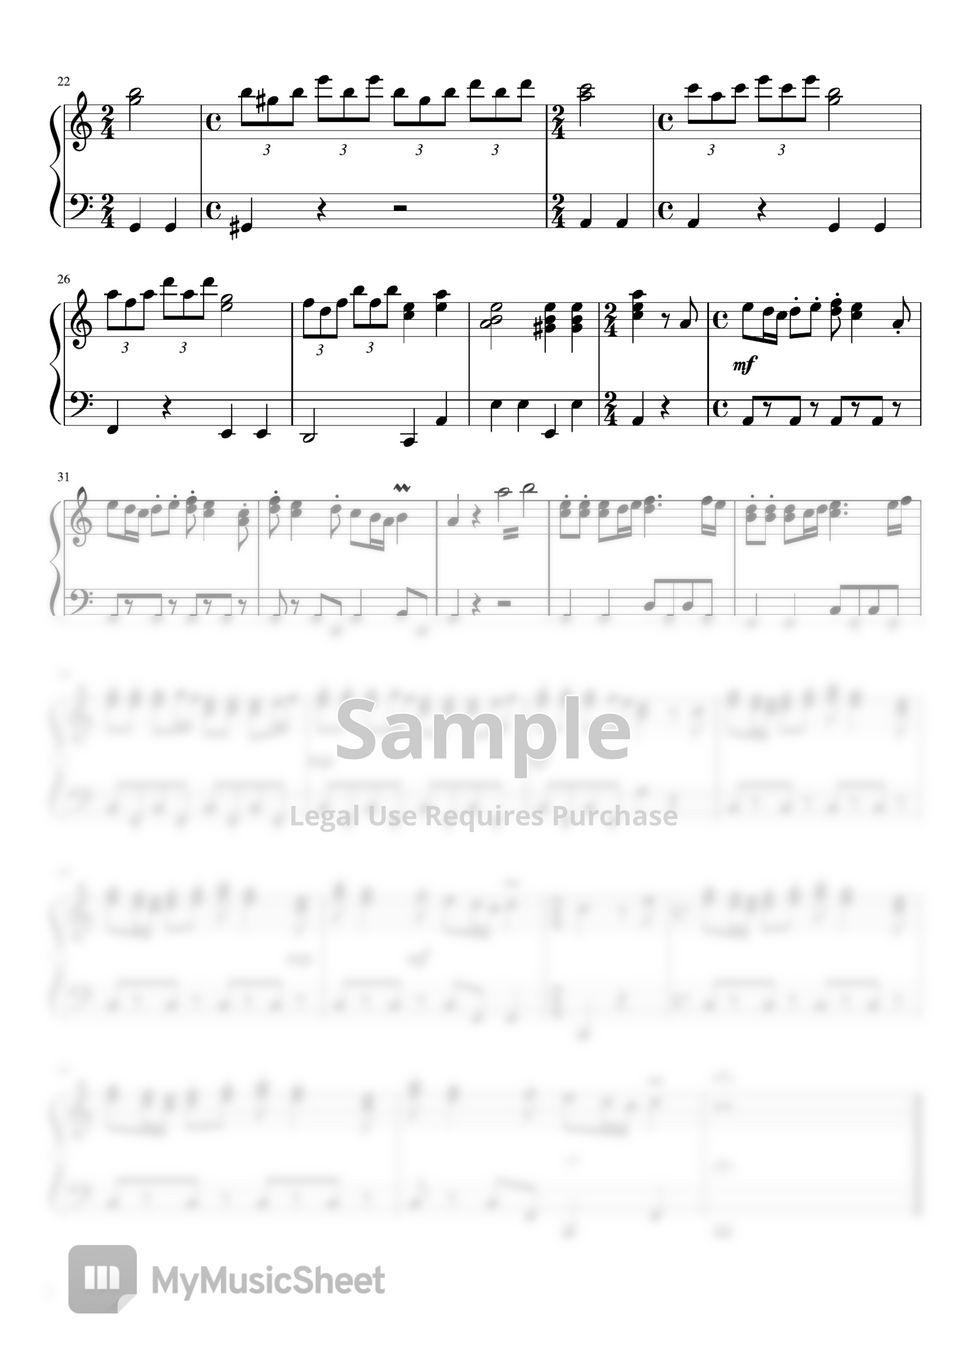 Vivaldi - "Spring" from Four Seasons (Cdur piano soloBeginner to Intermediate) by pfkaori